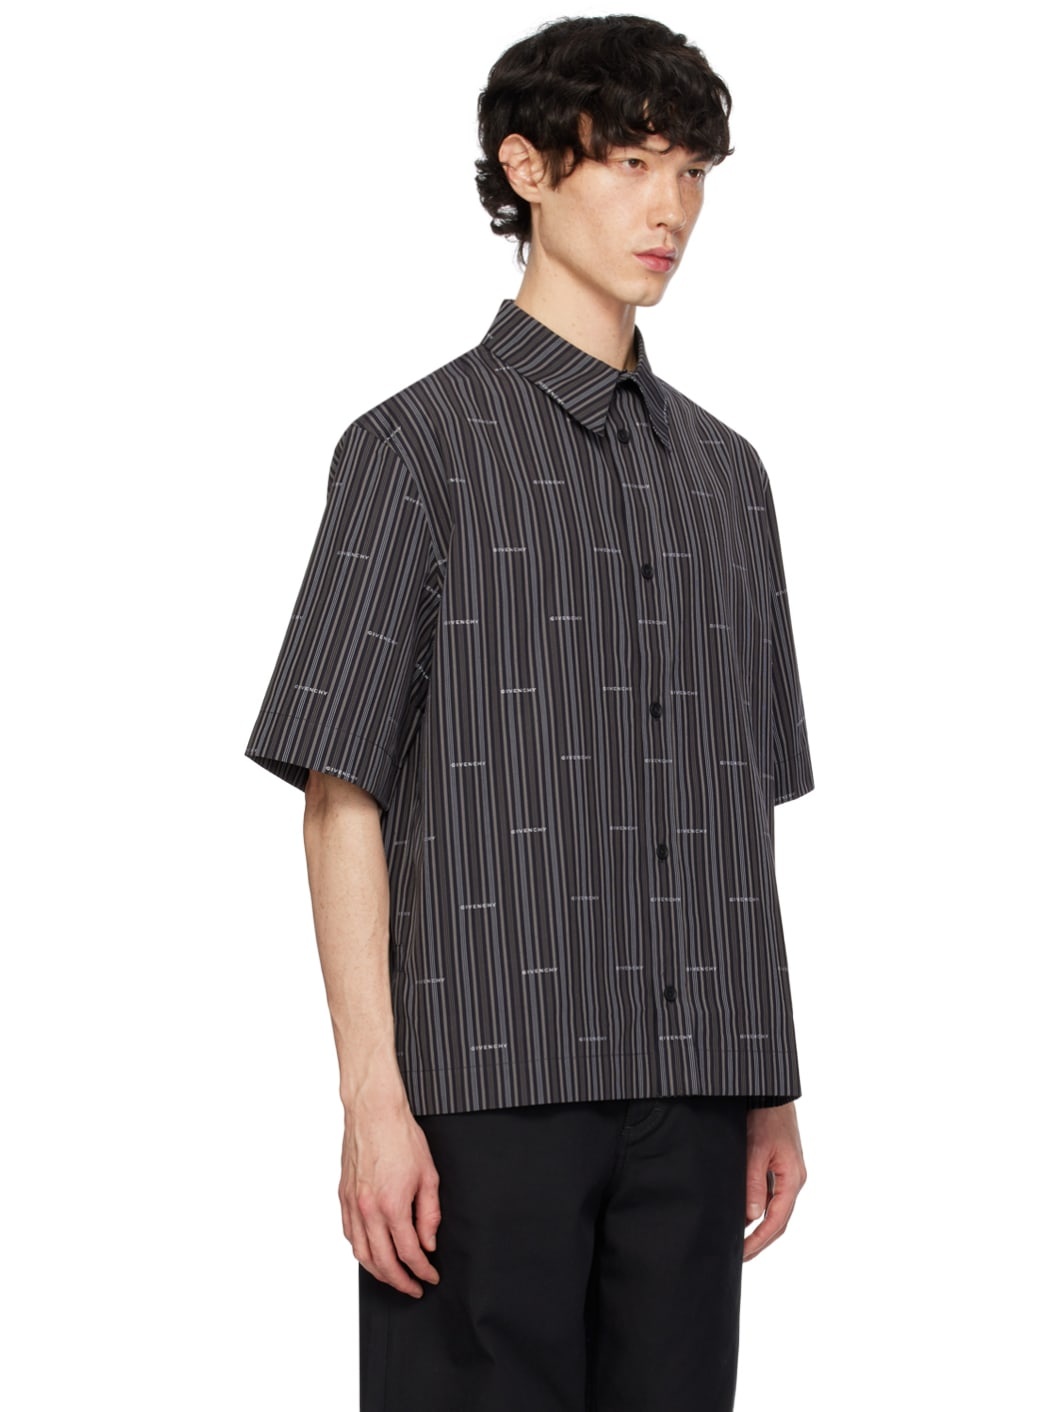 Black Striped Shirt - 2